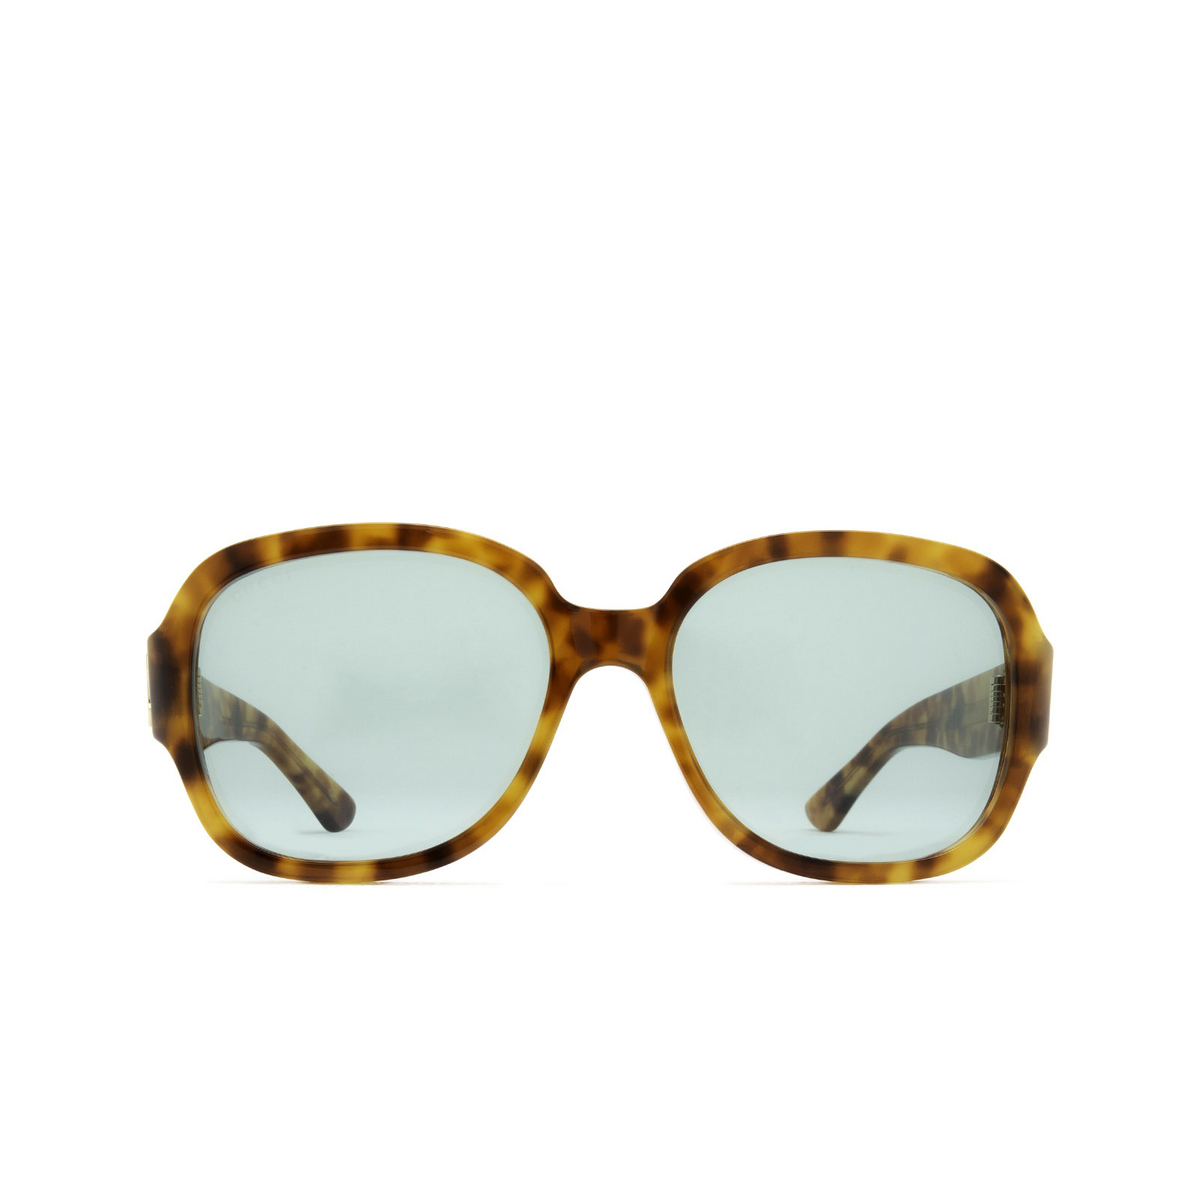 Gucci® Square Sunglasses: GG0989S color Havana 001 - front view.